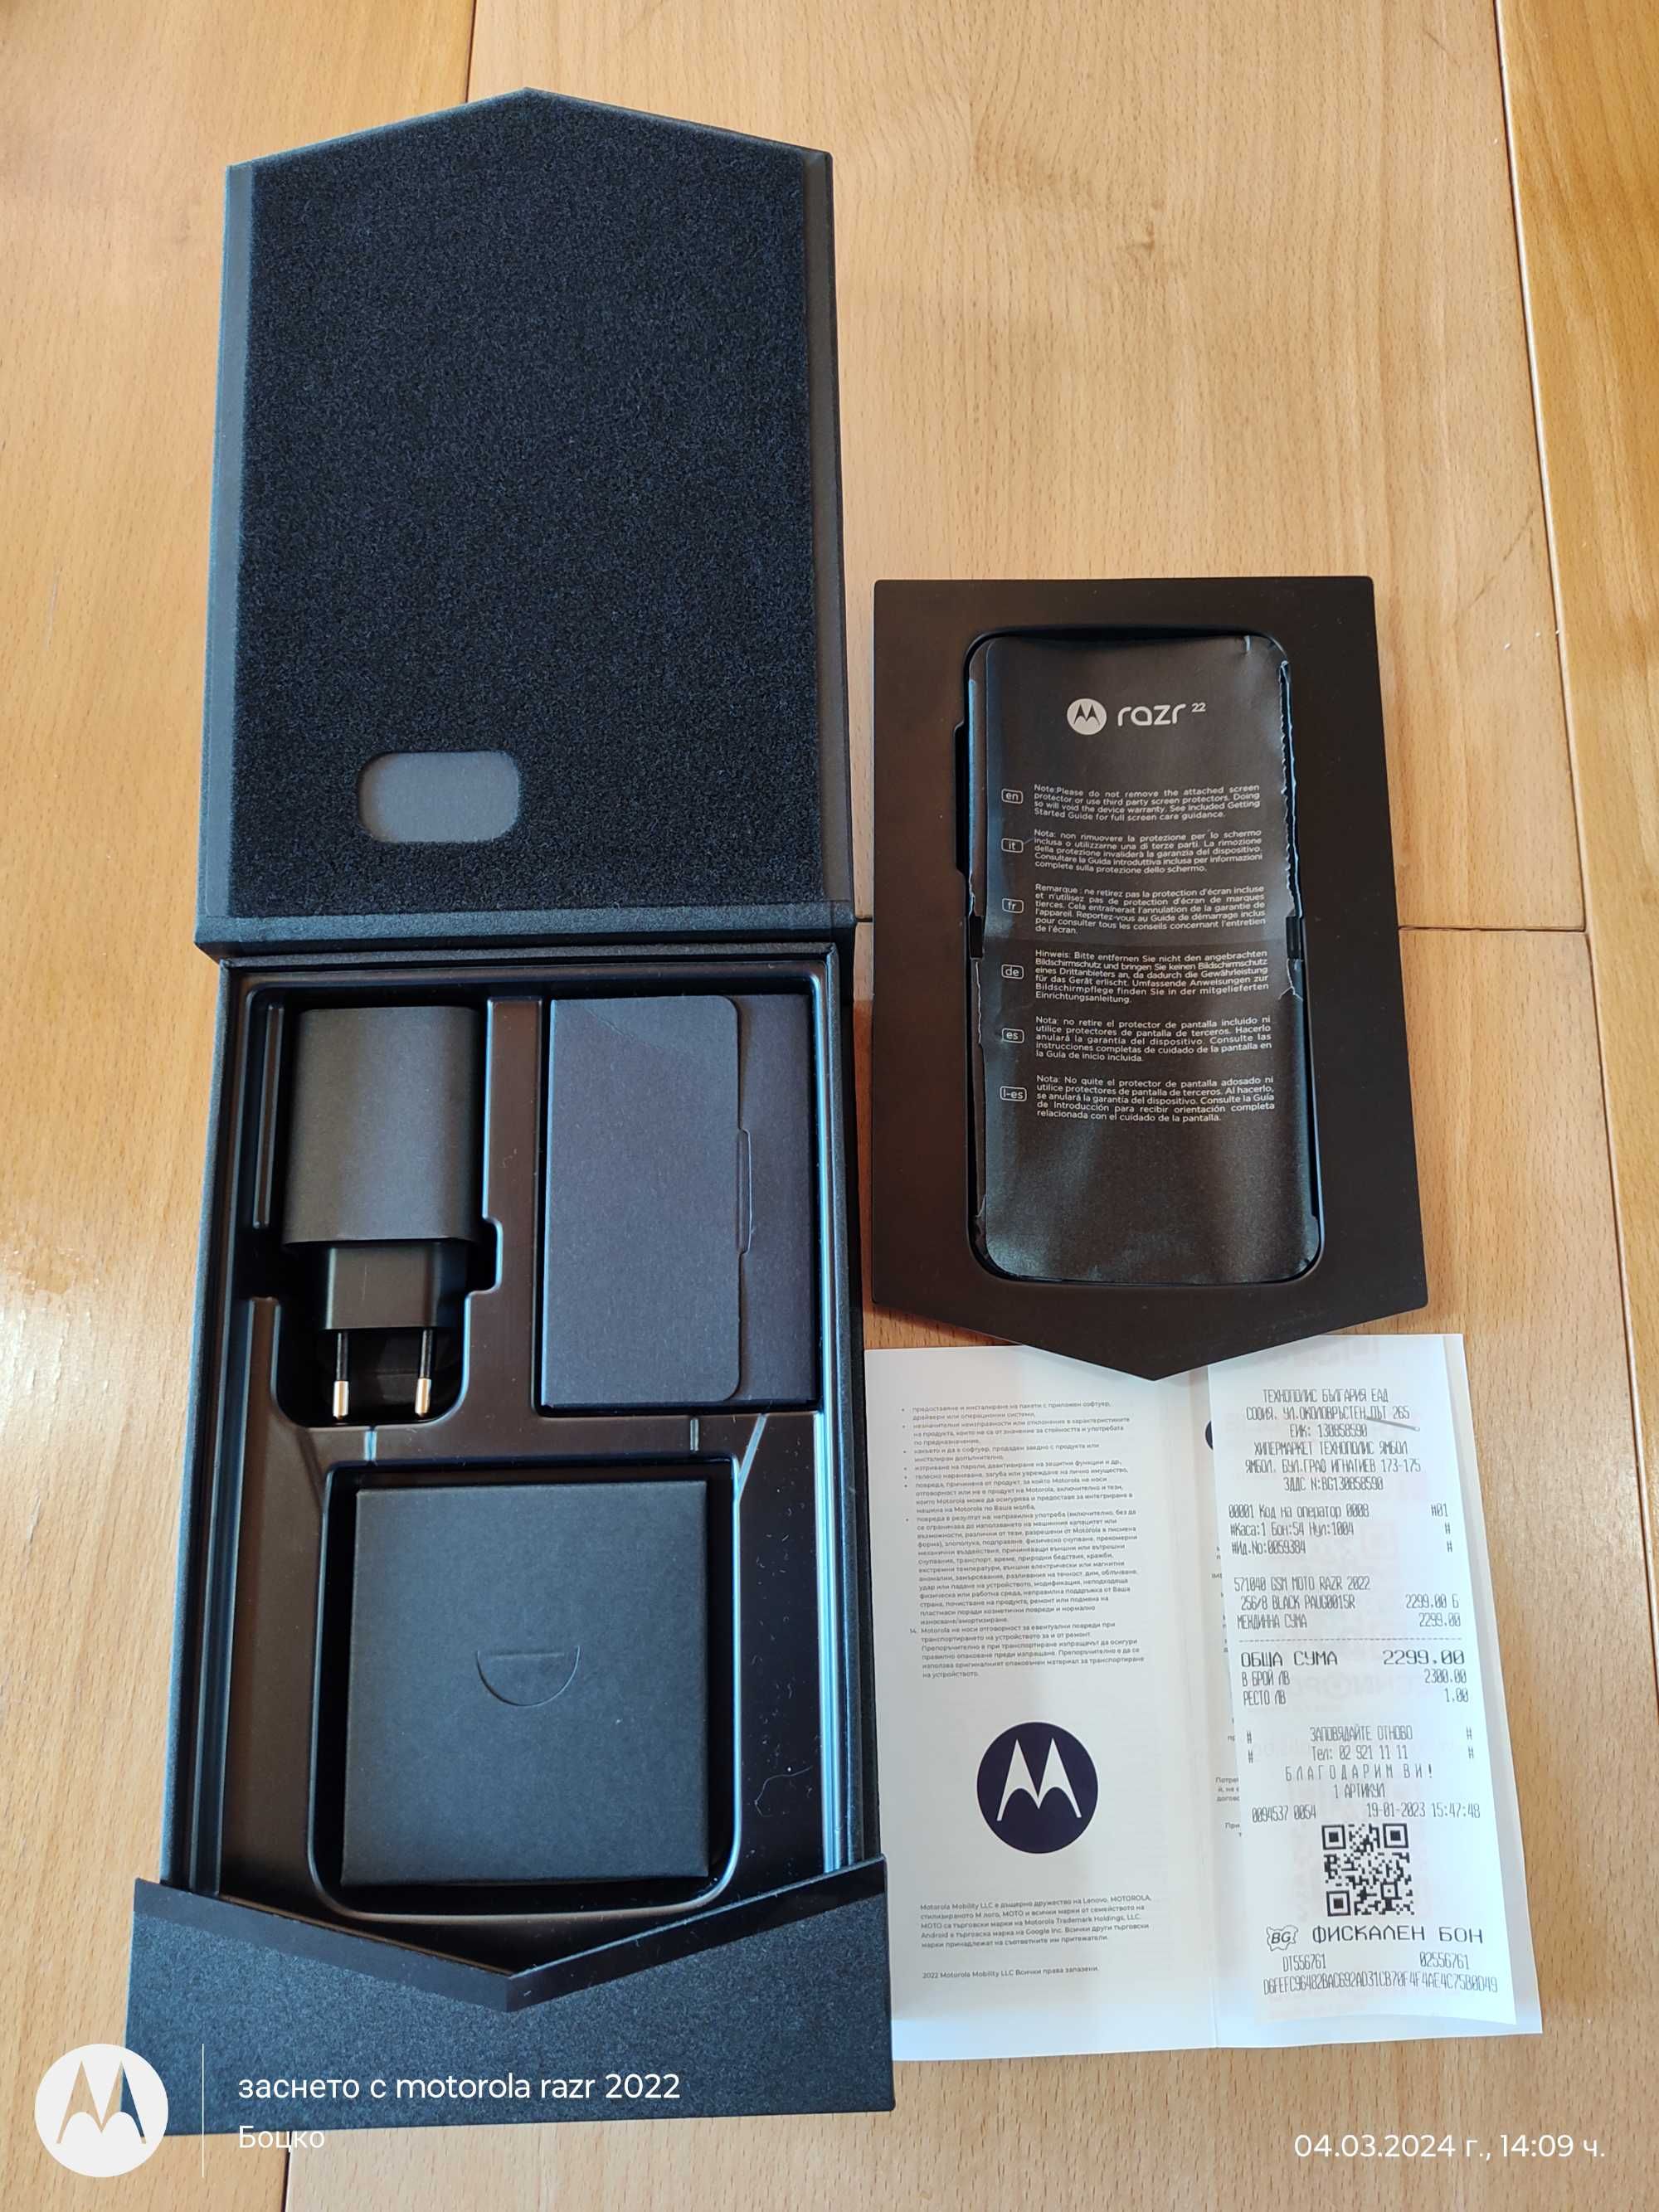 Motorola razr 2022